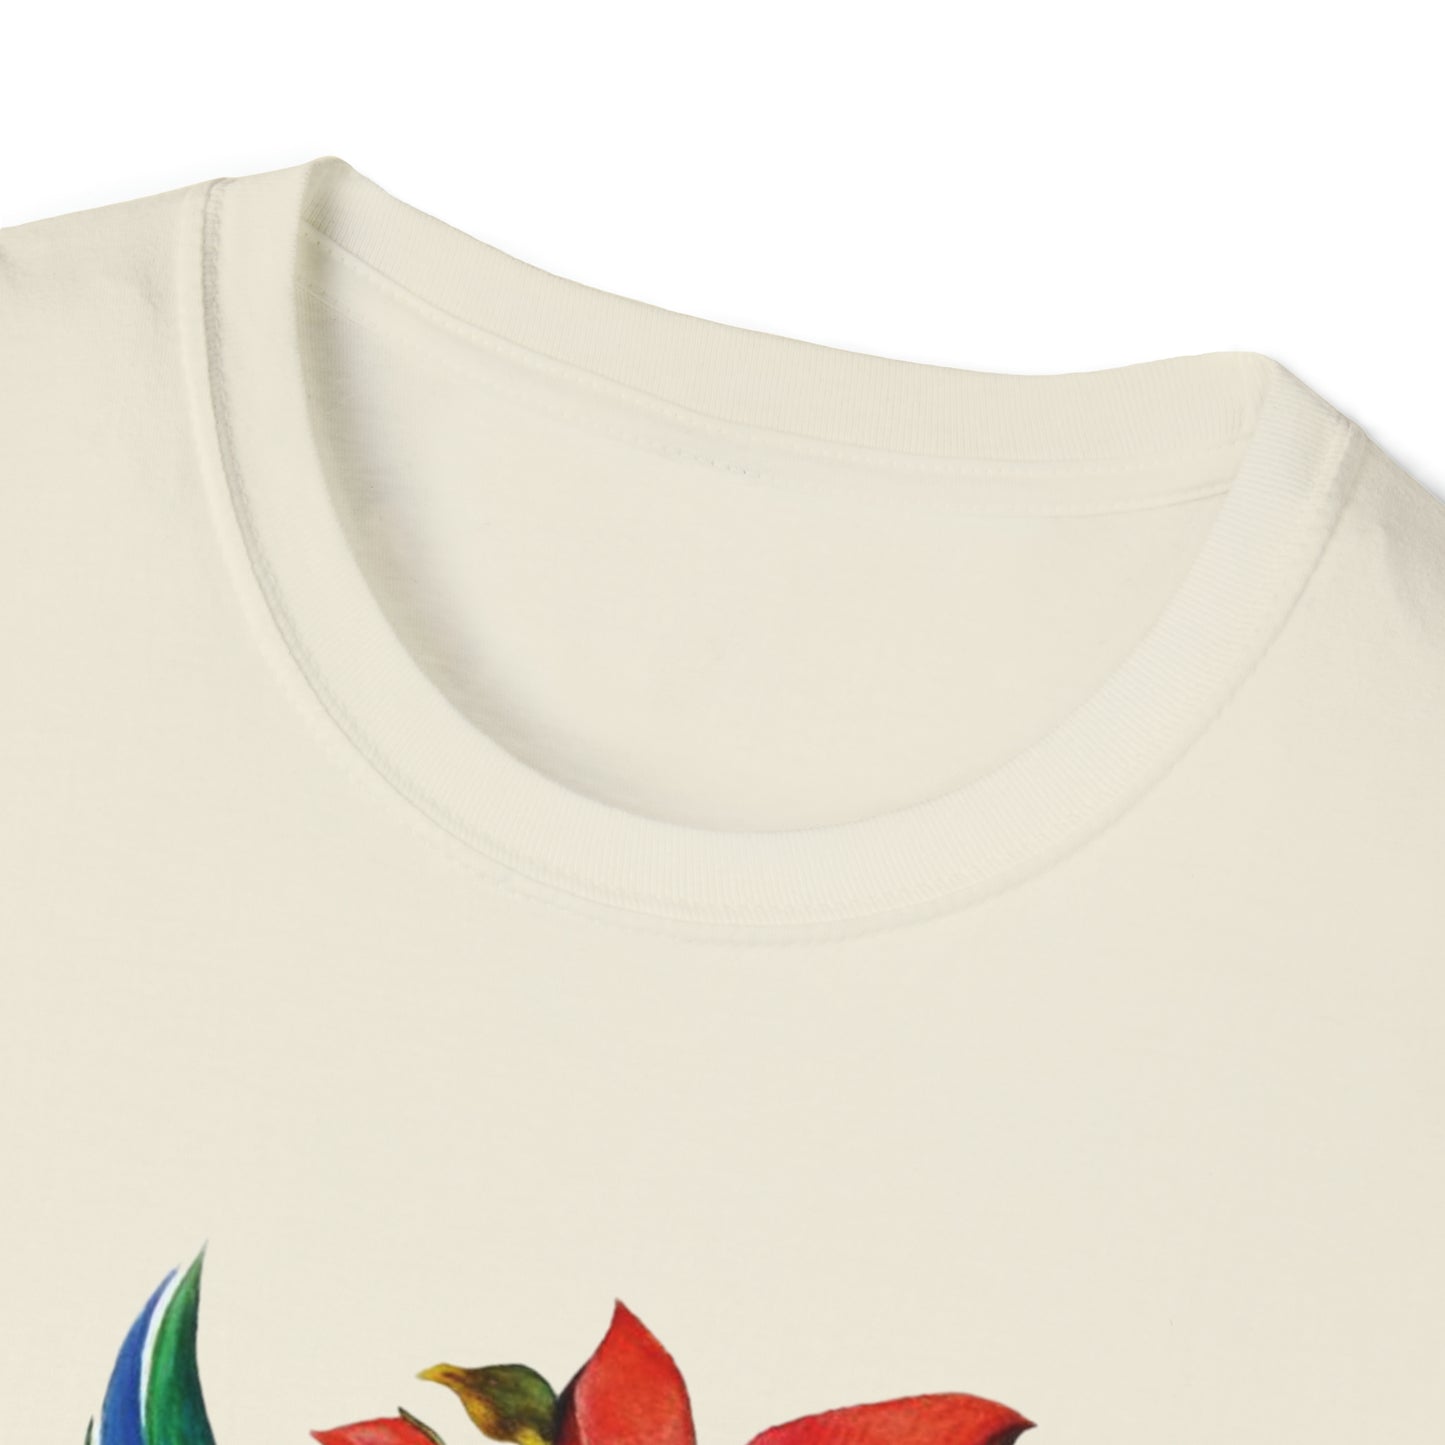 Red Flowers Hummingbird  T-Shirt